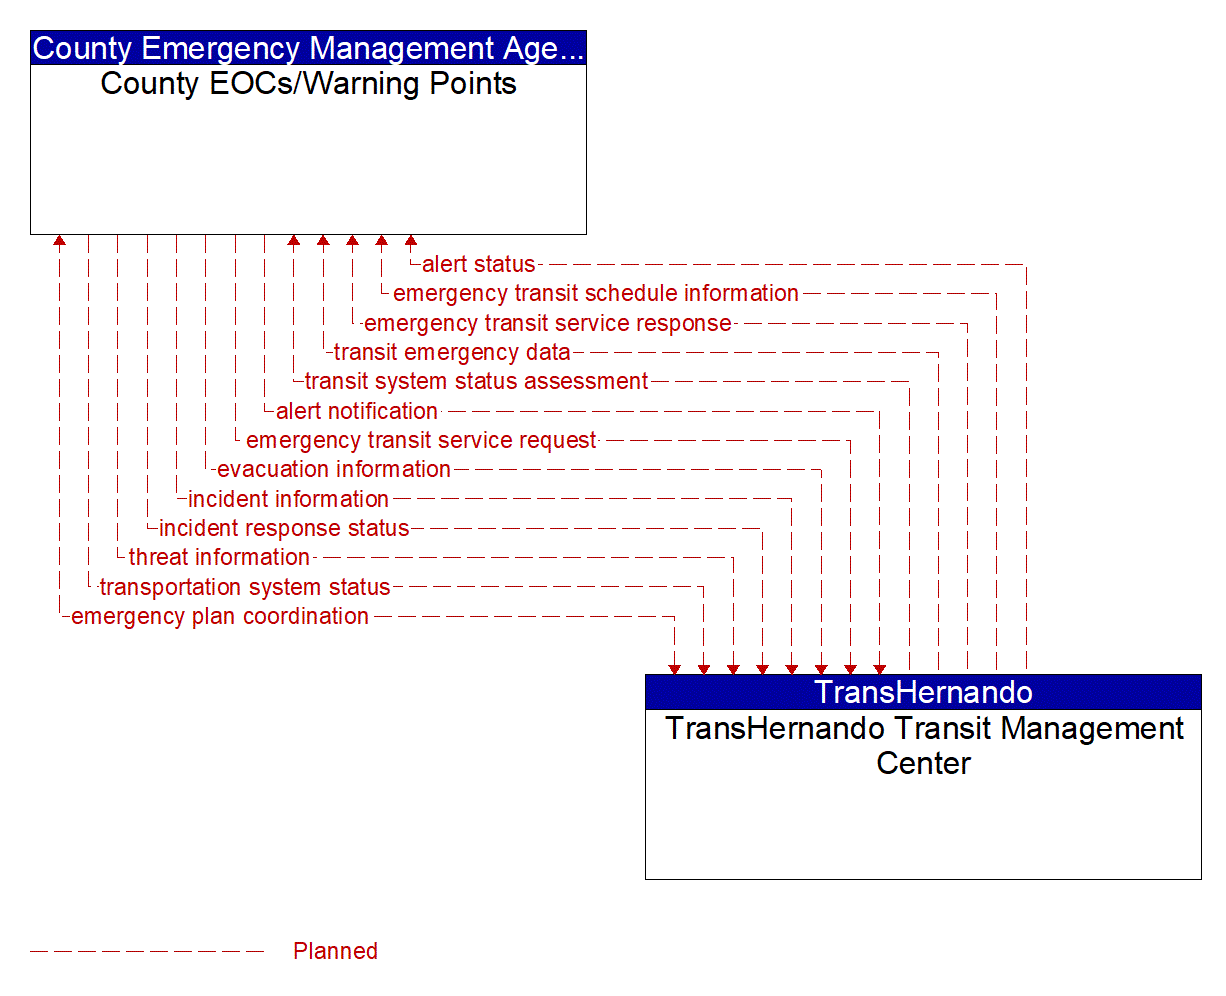 Architecture Flow Diagram: TransHernando Transit Management Center <--> County EOCs/Warning Points